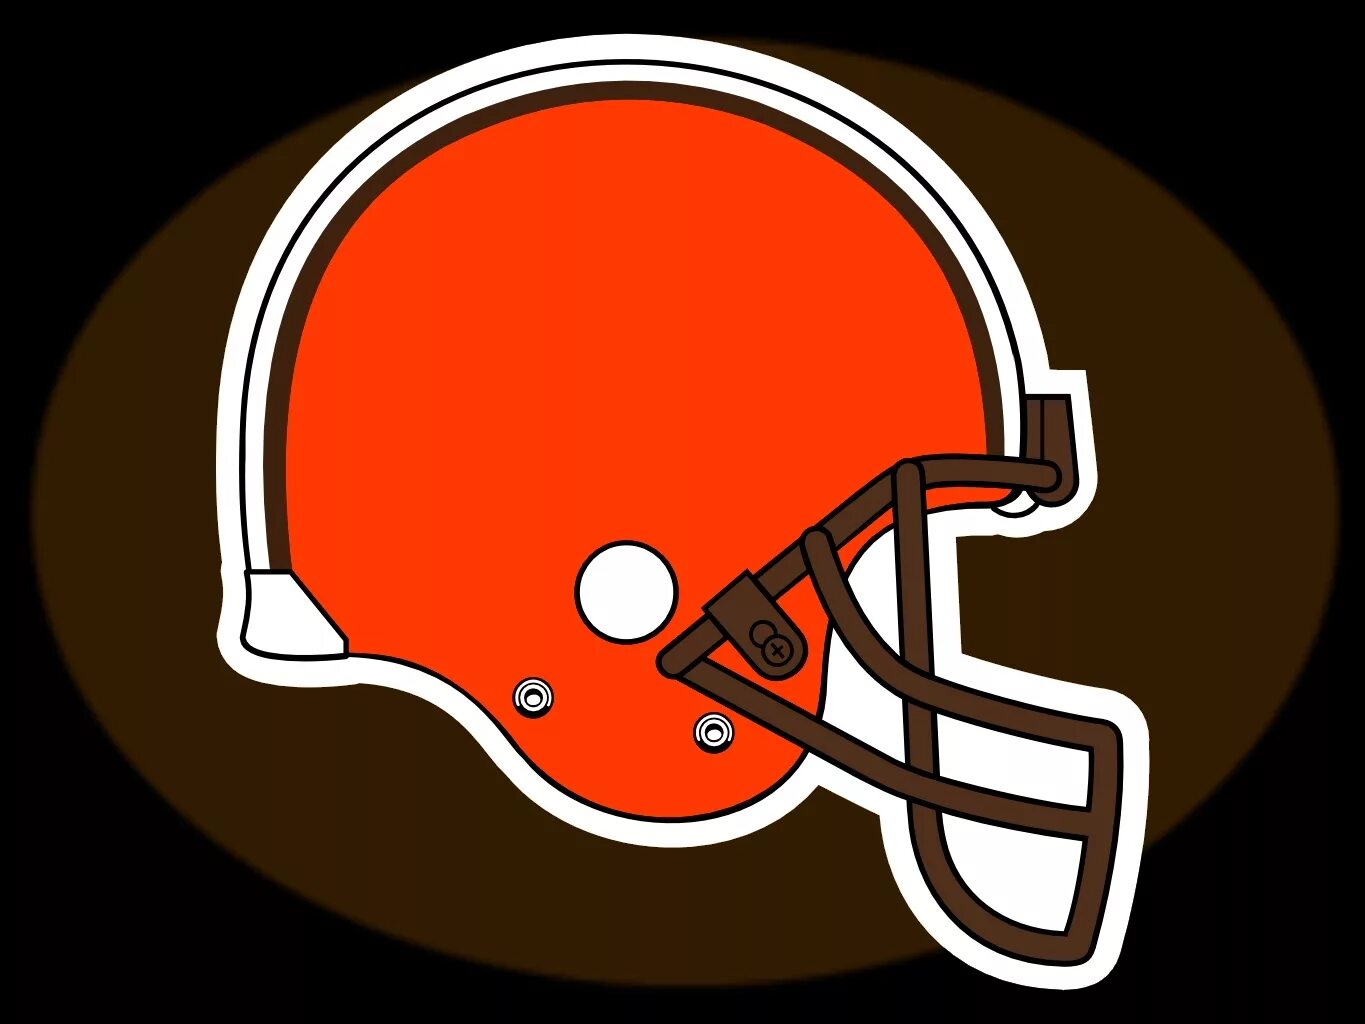 Browns com. Кливленд Браунс лого. Каска логотип. Искусственный интеллект каска логотип. Br Browns logo.